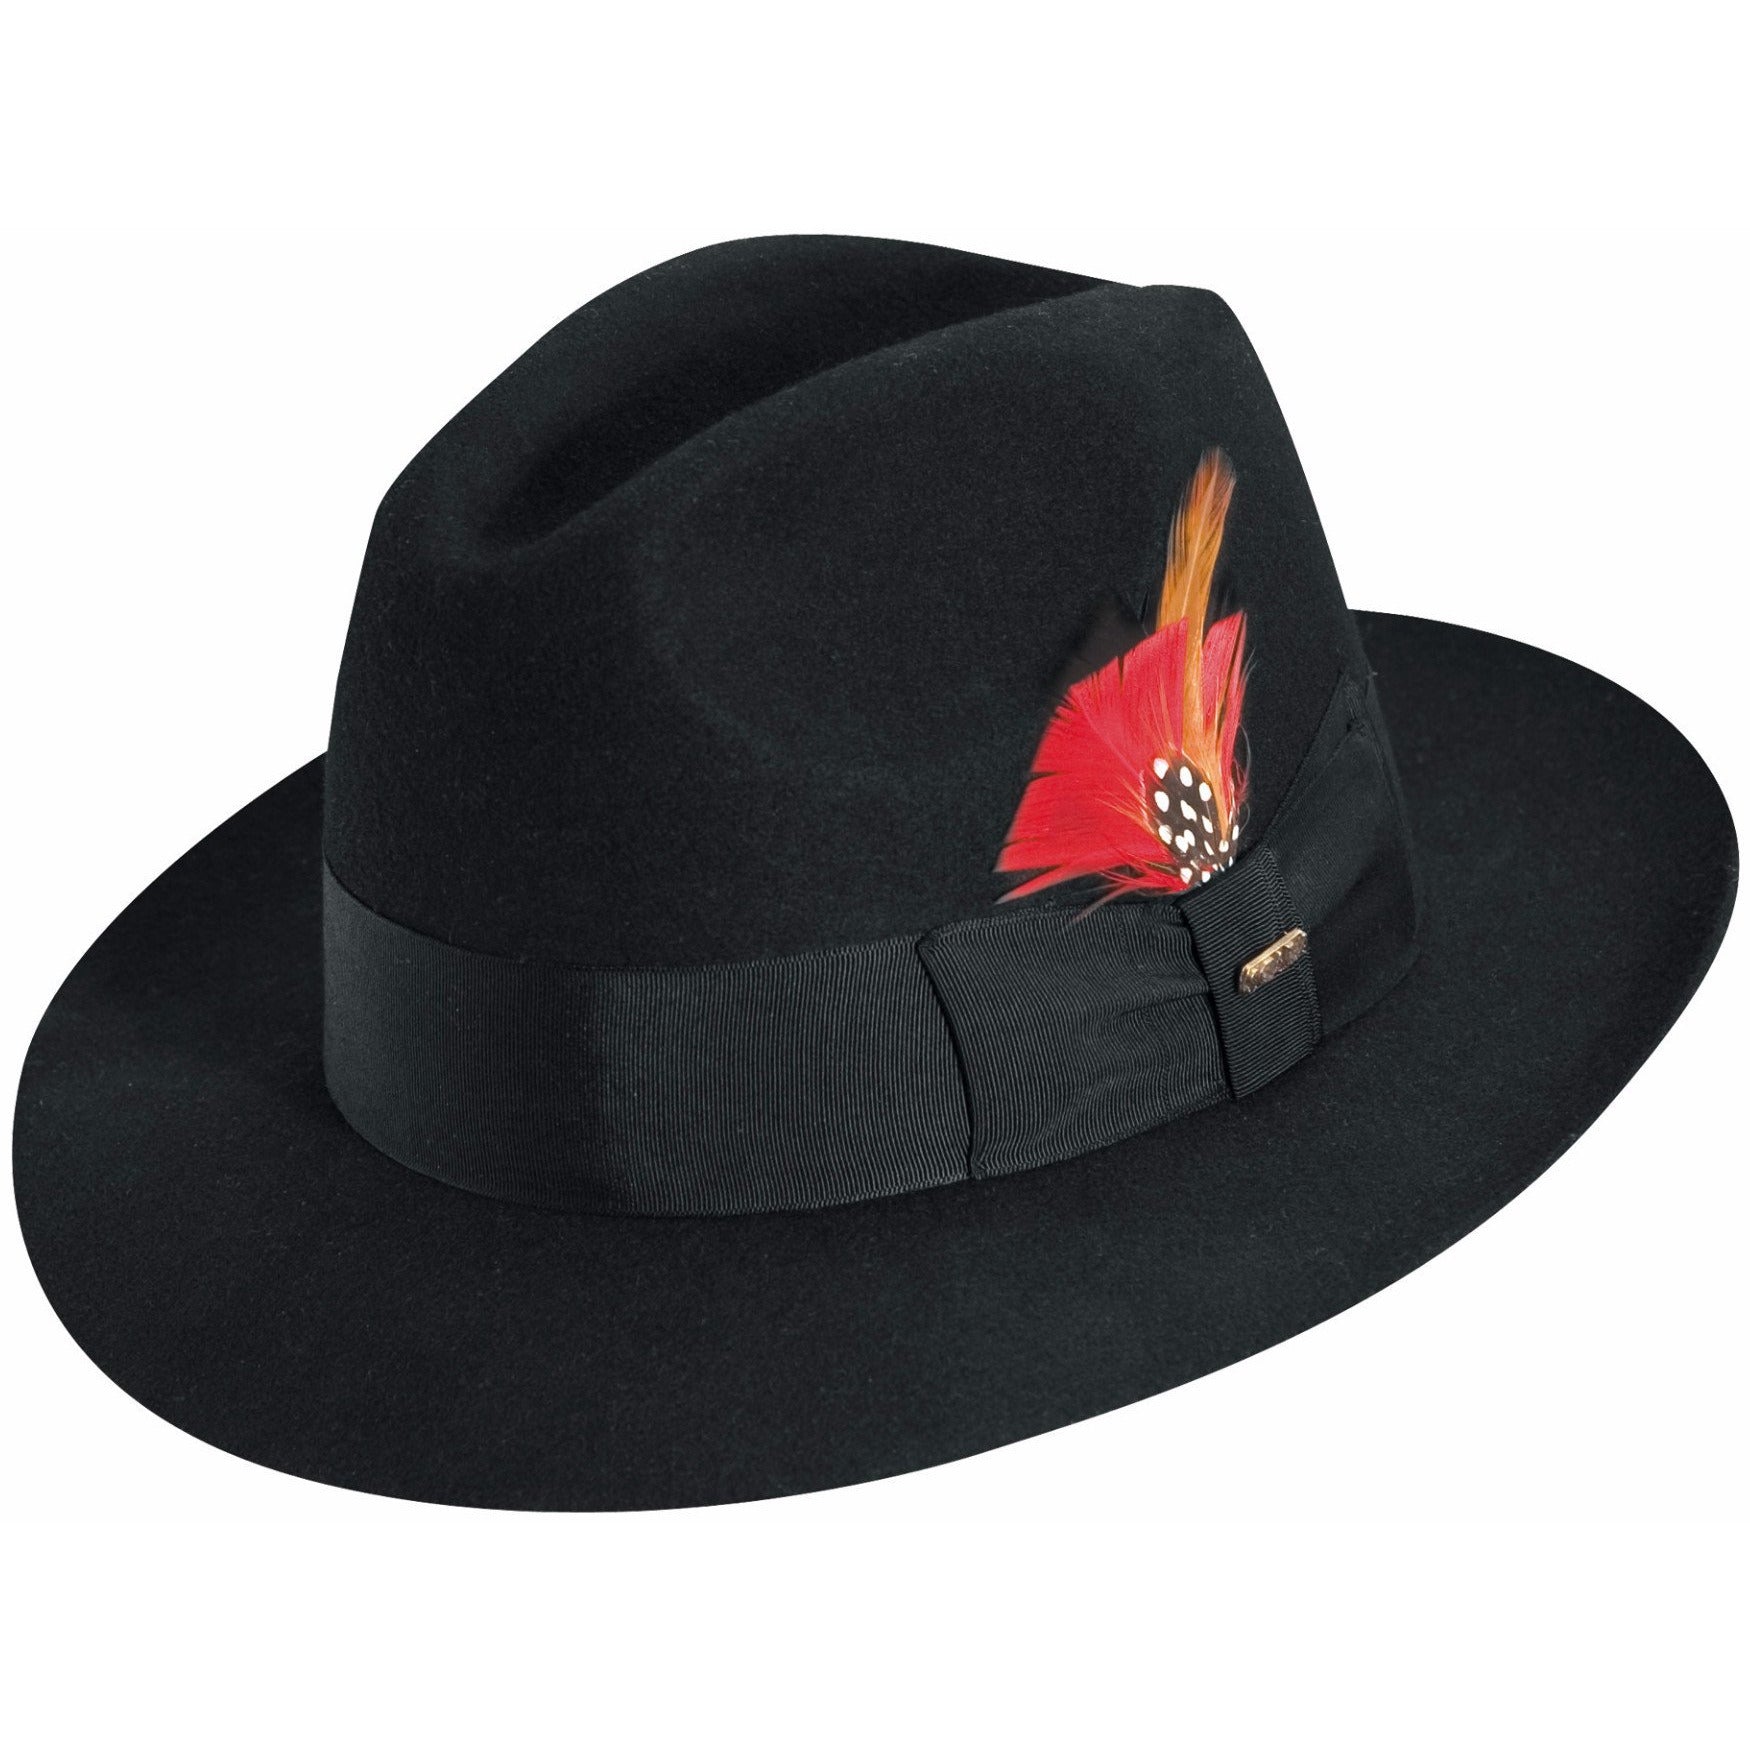 Scala Wool Felt Fedora Hat Black